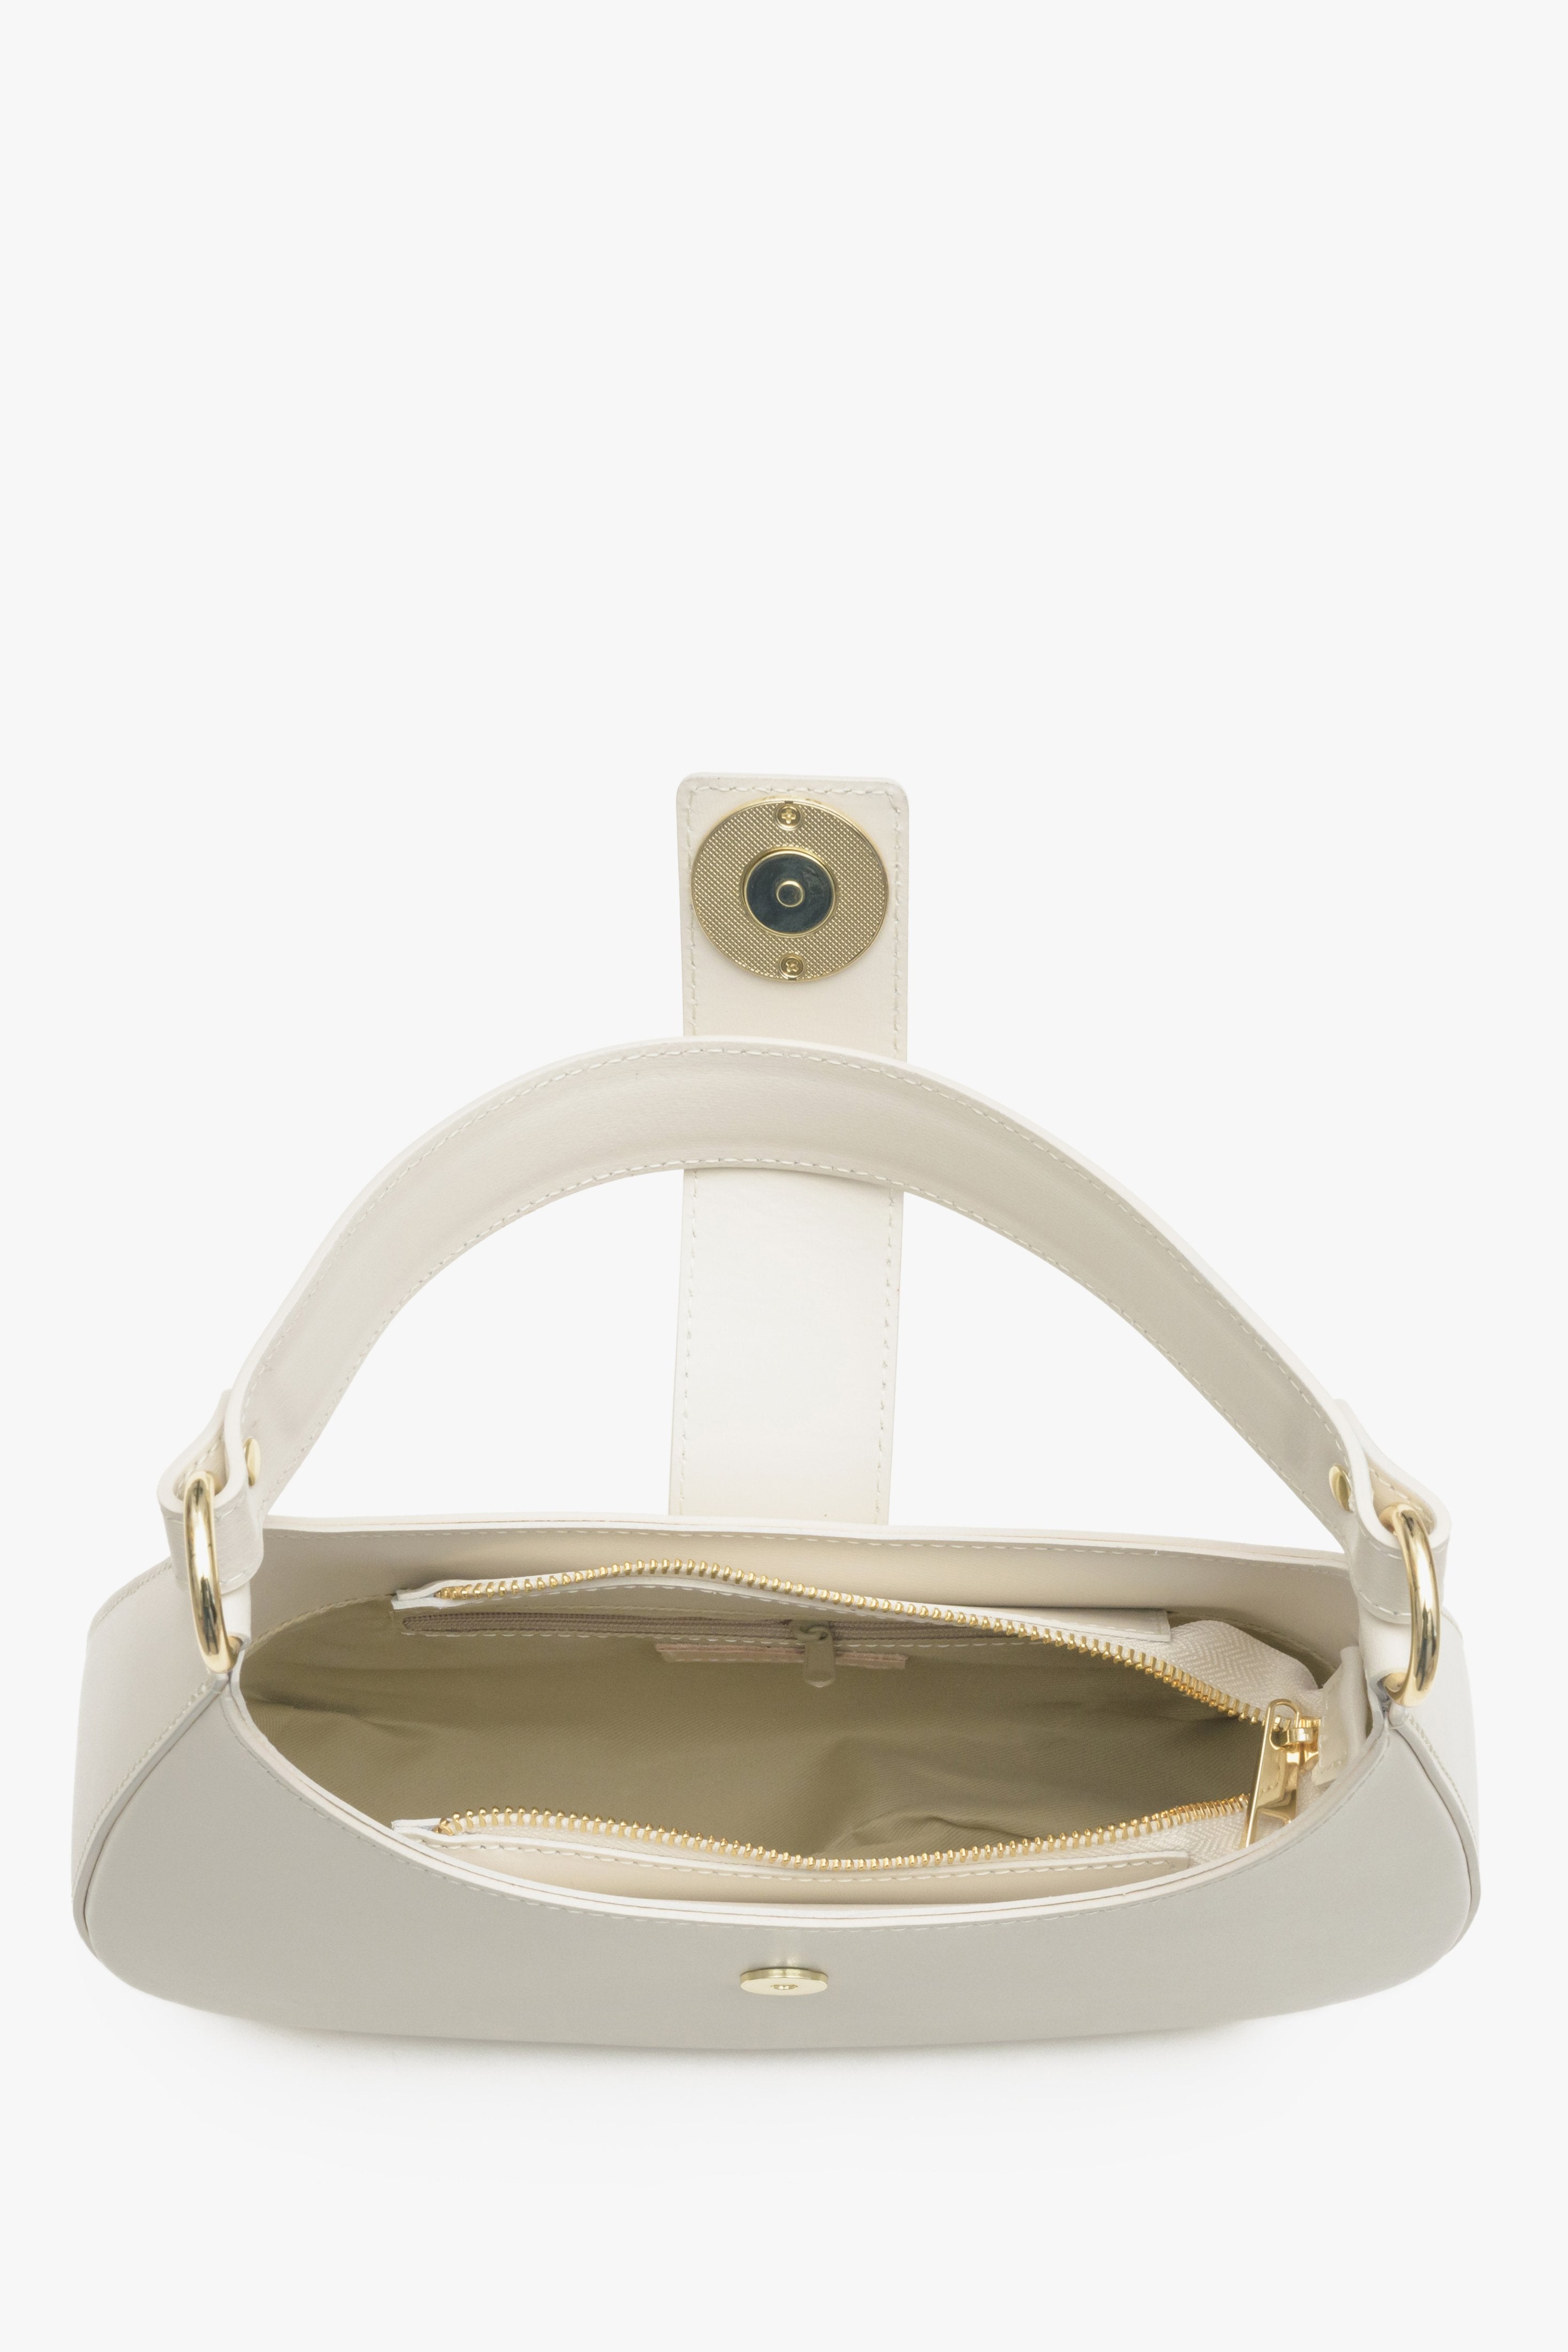 Estro women's milky-beige baguette-style handbag made of Italian genuine leather.